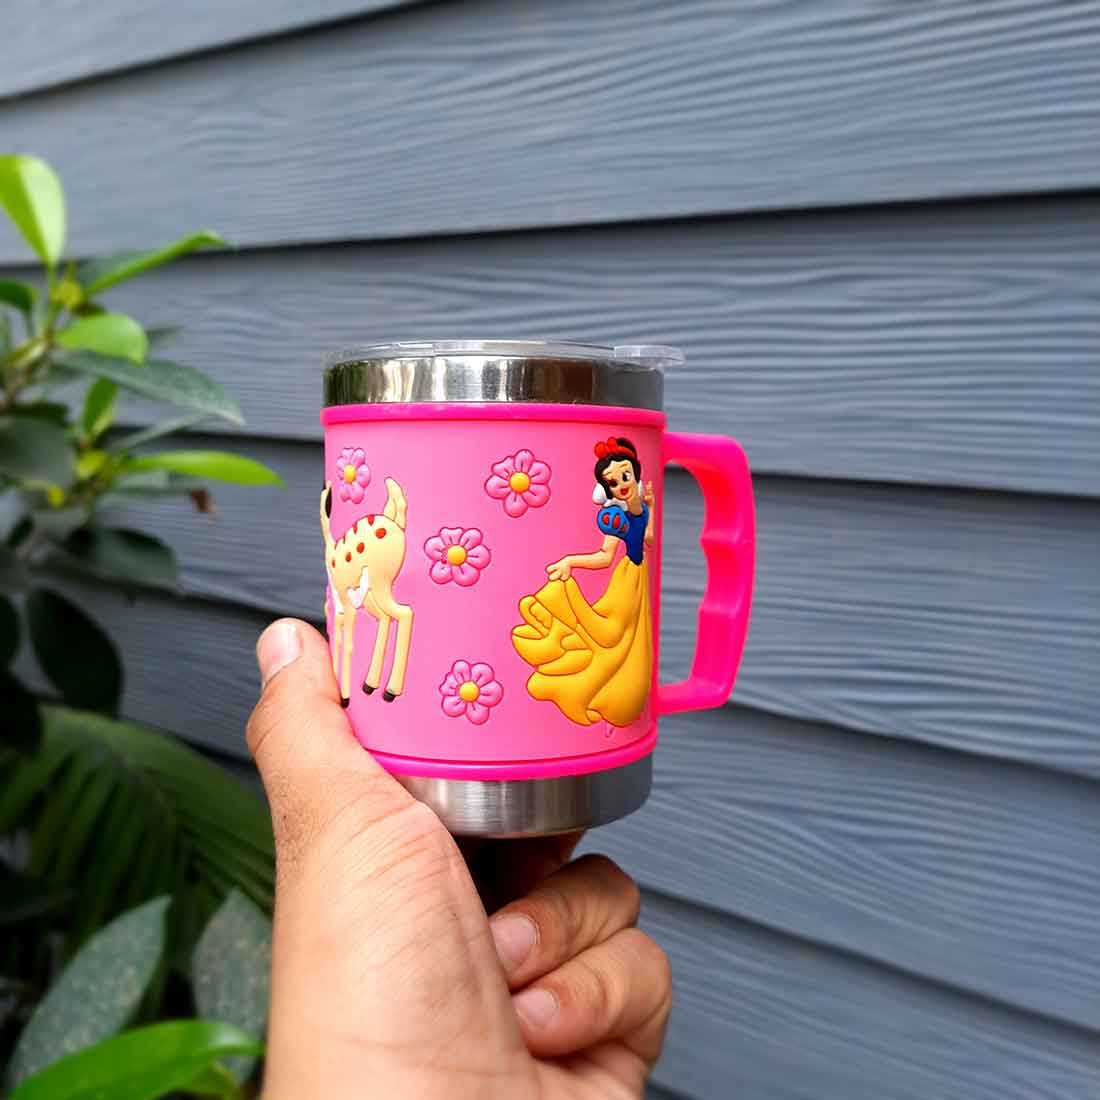 Snow White Design Mug with Lid - For Girls, Kids and Boys - 4 inch - ApkaMart